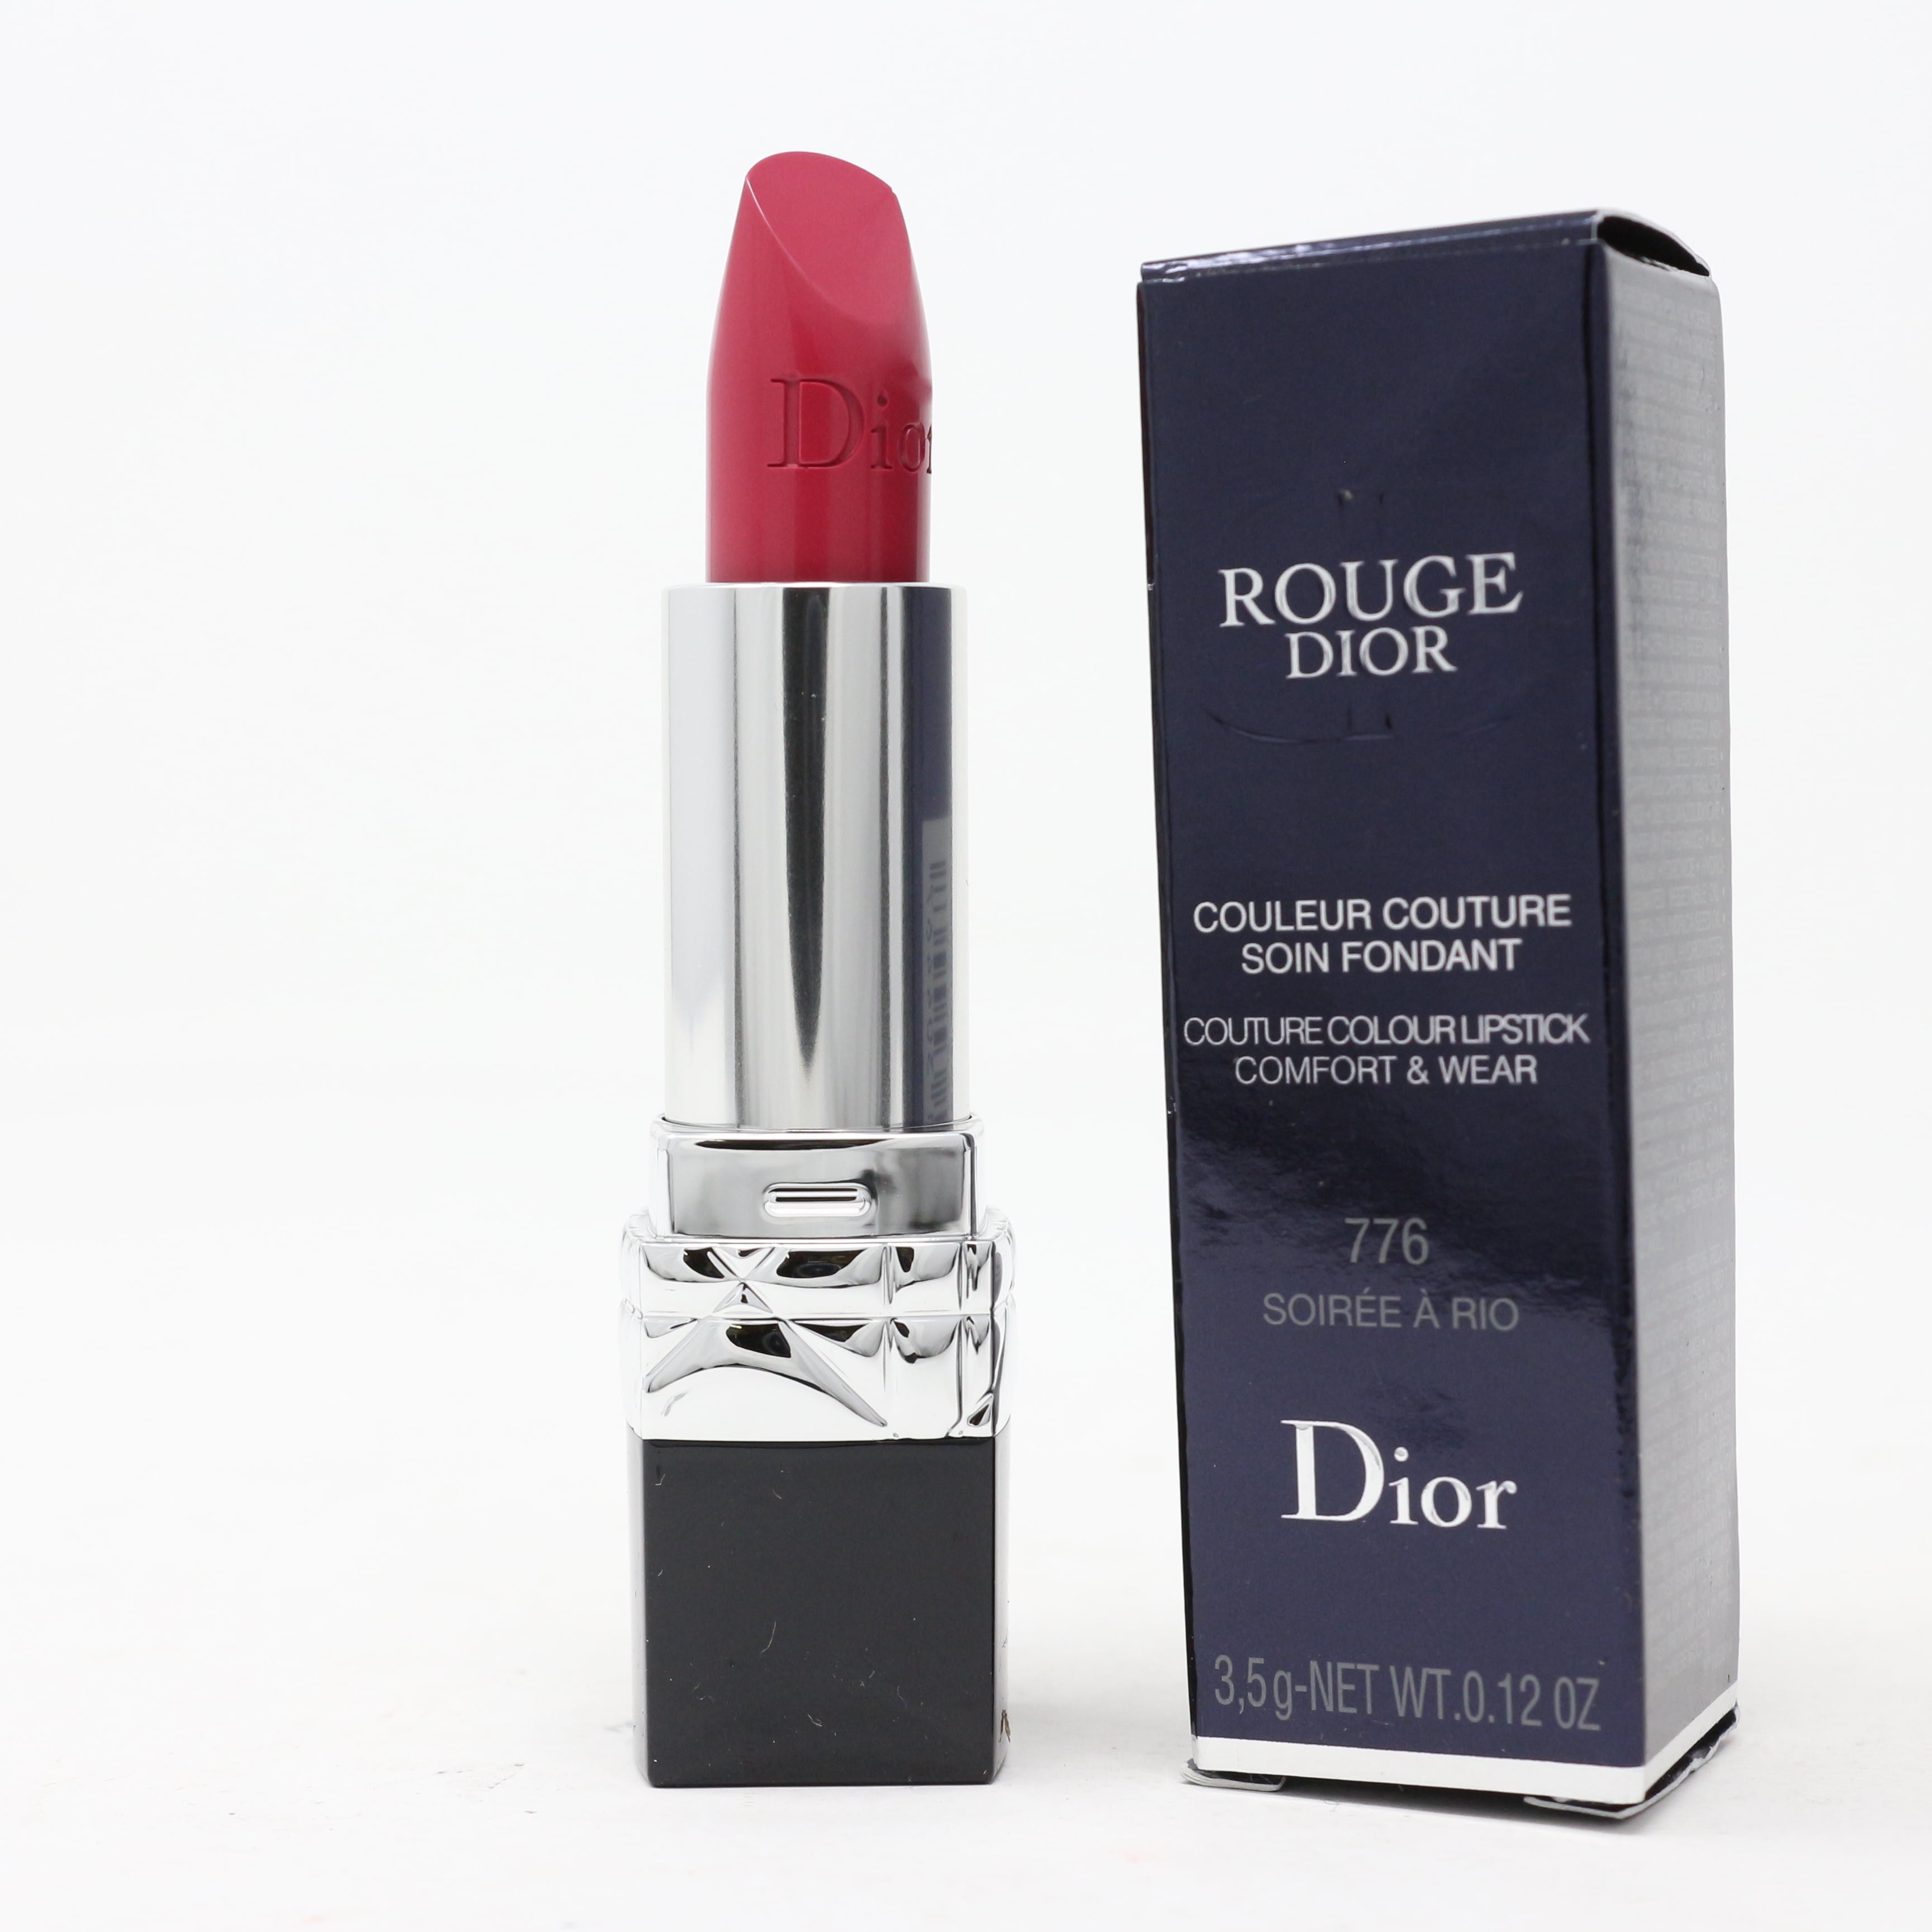 dior lipstick packaging